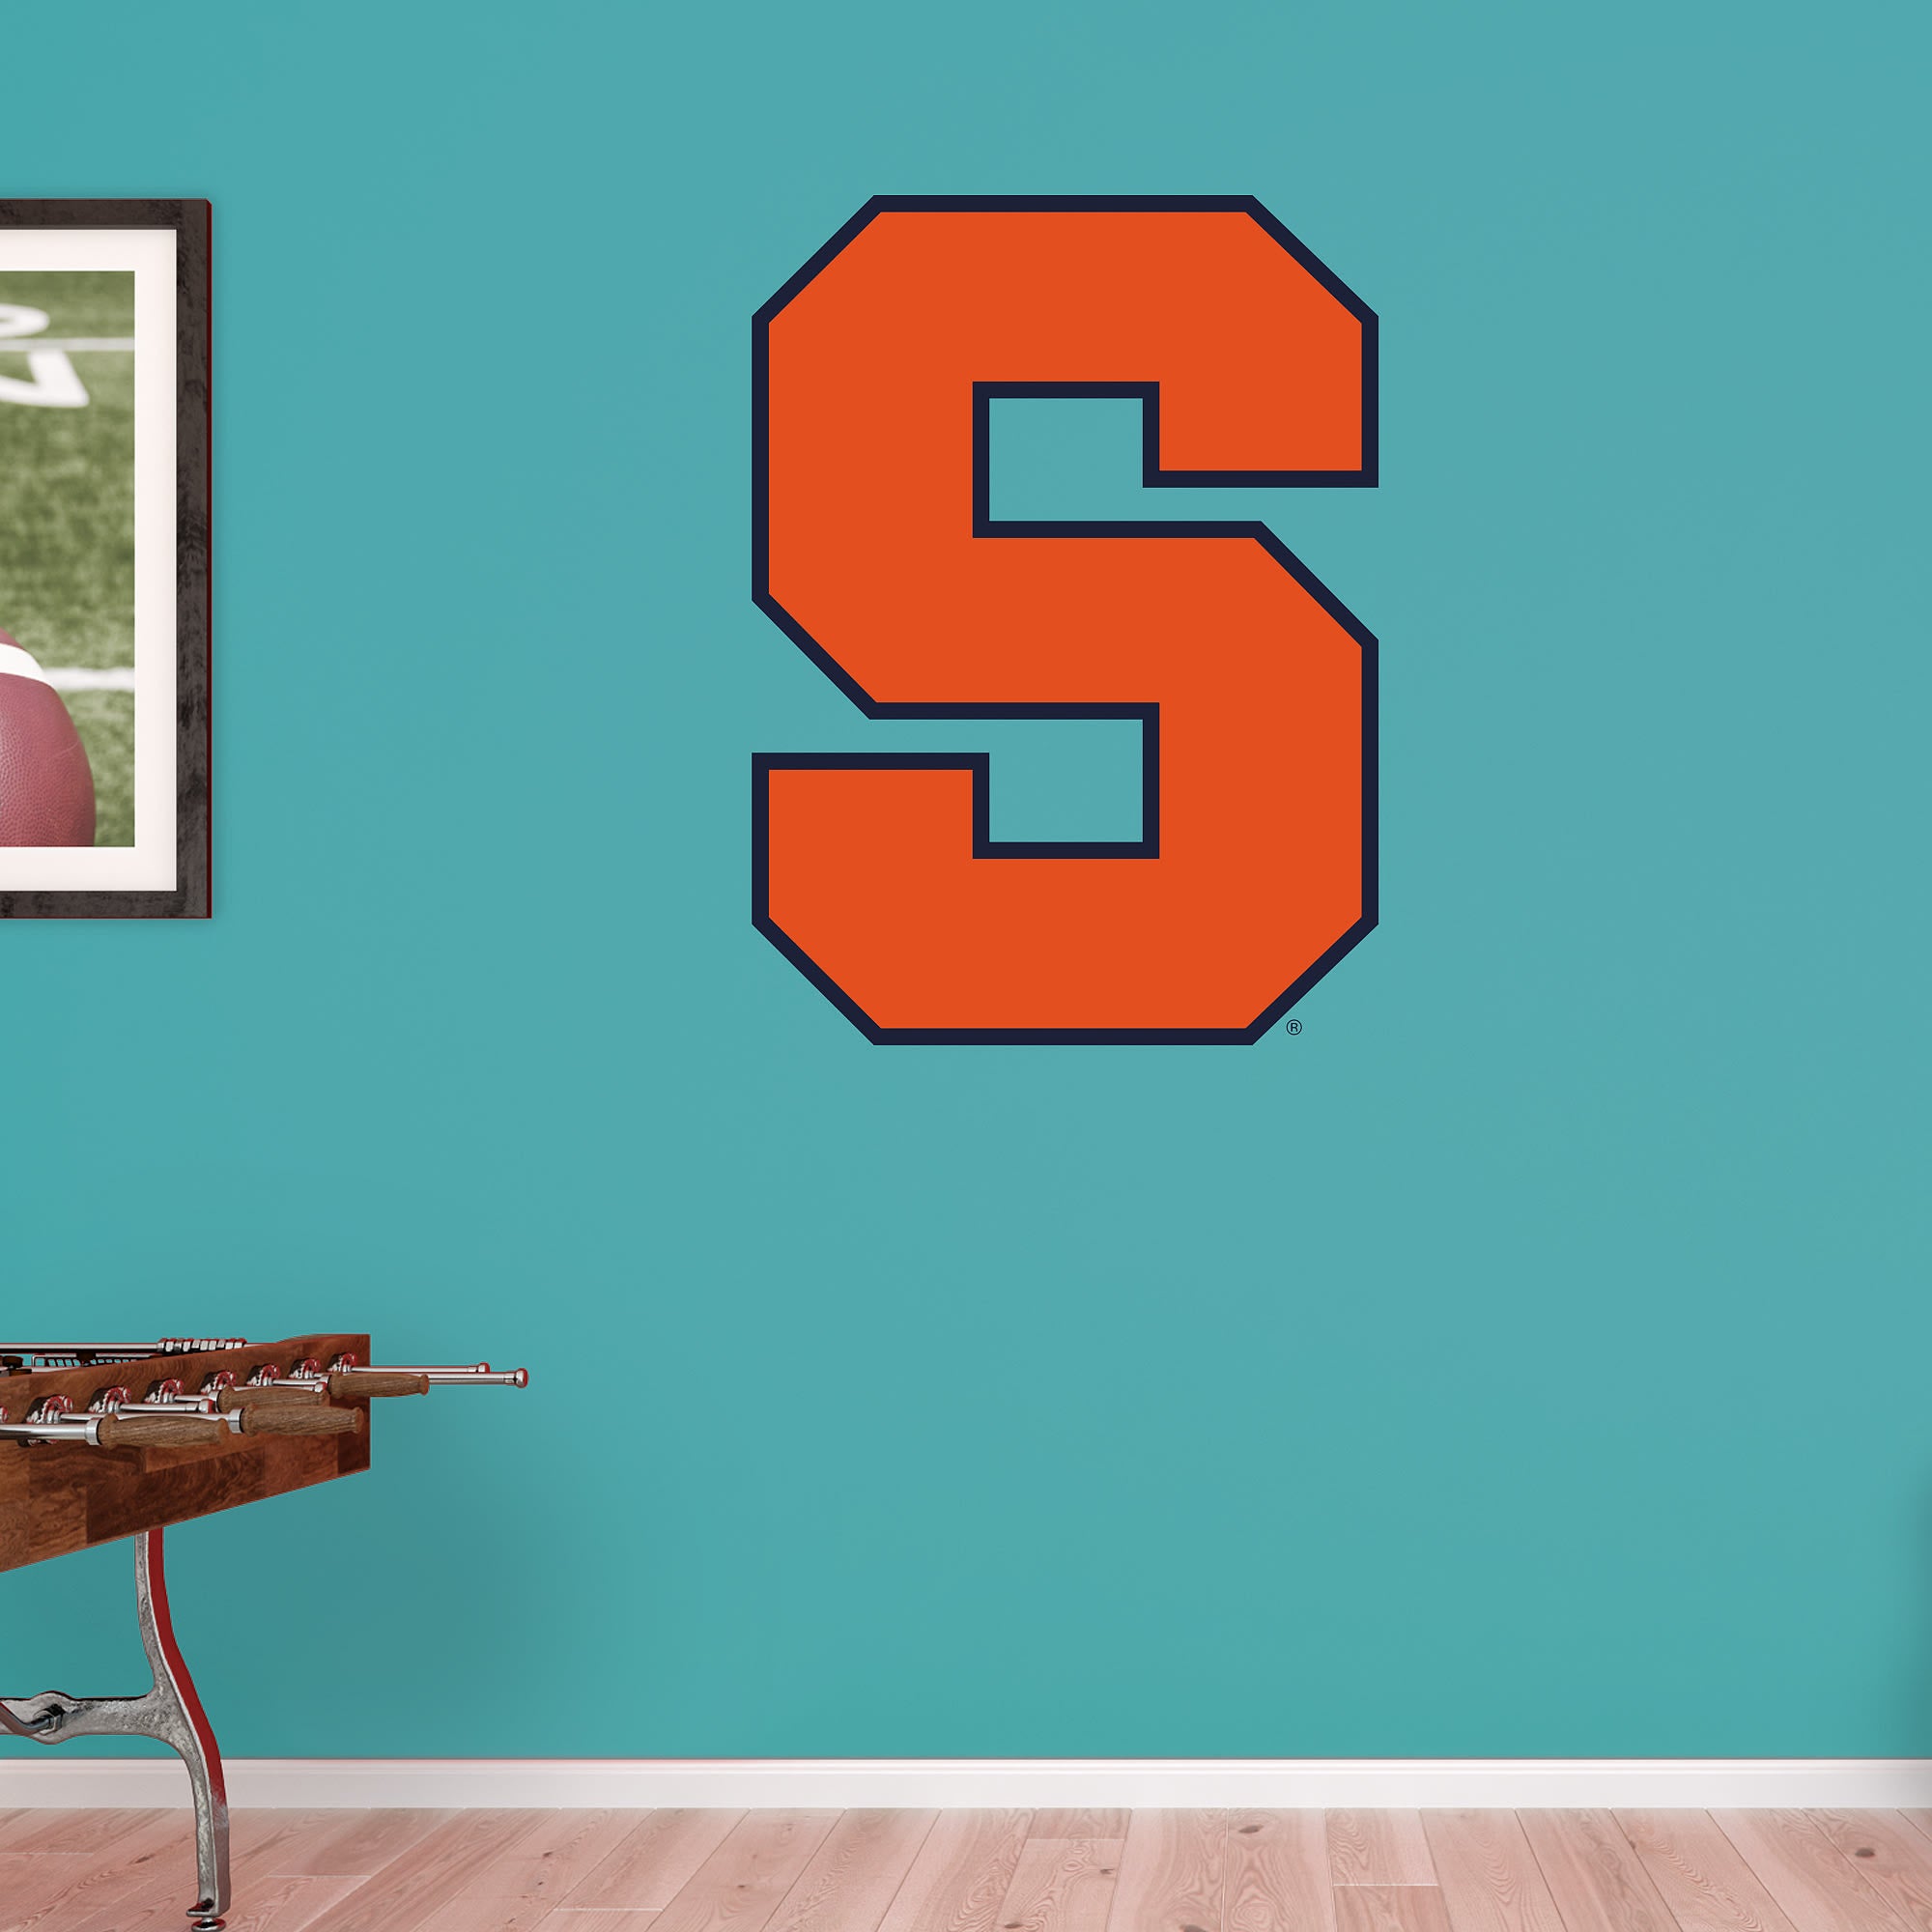 Syracuse Orange for Syracuse Orangemen: Logo - Officially Licensed Removable Wall Decal 32.0"W x 44.0"H by Fathead | Vinyl